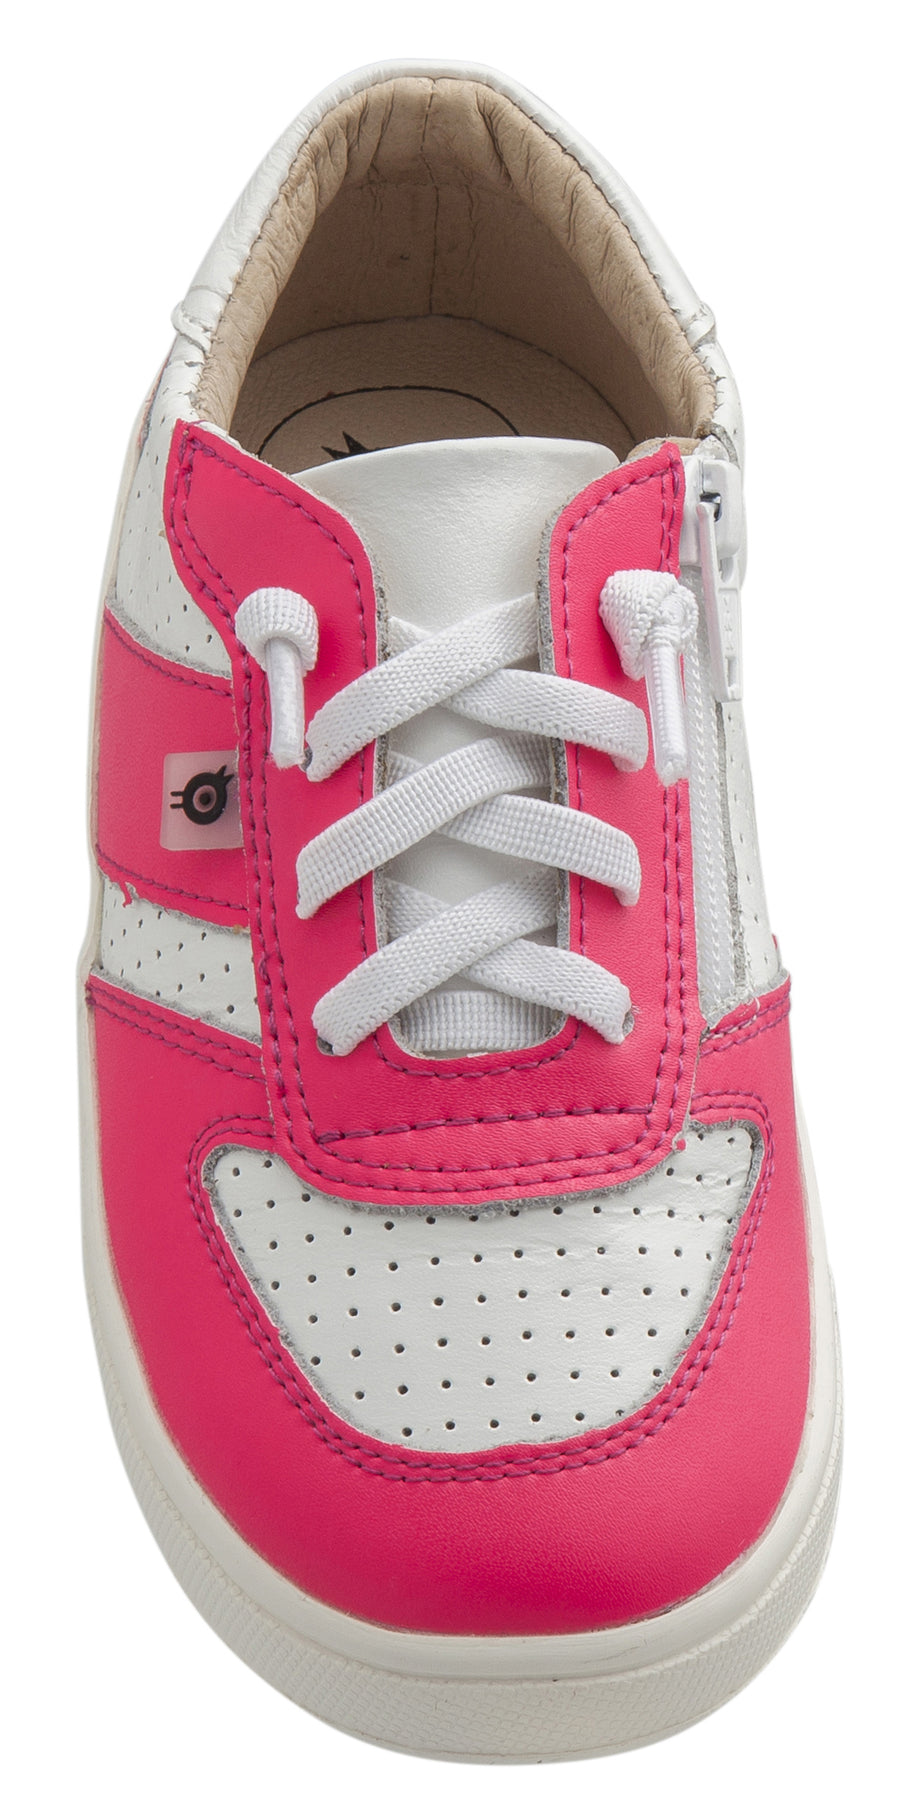 Old Soles Girl's Dashing Shoe, Neon Pink/Snow